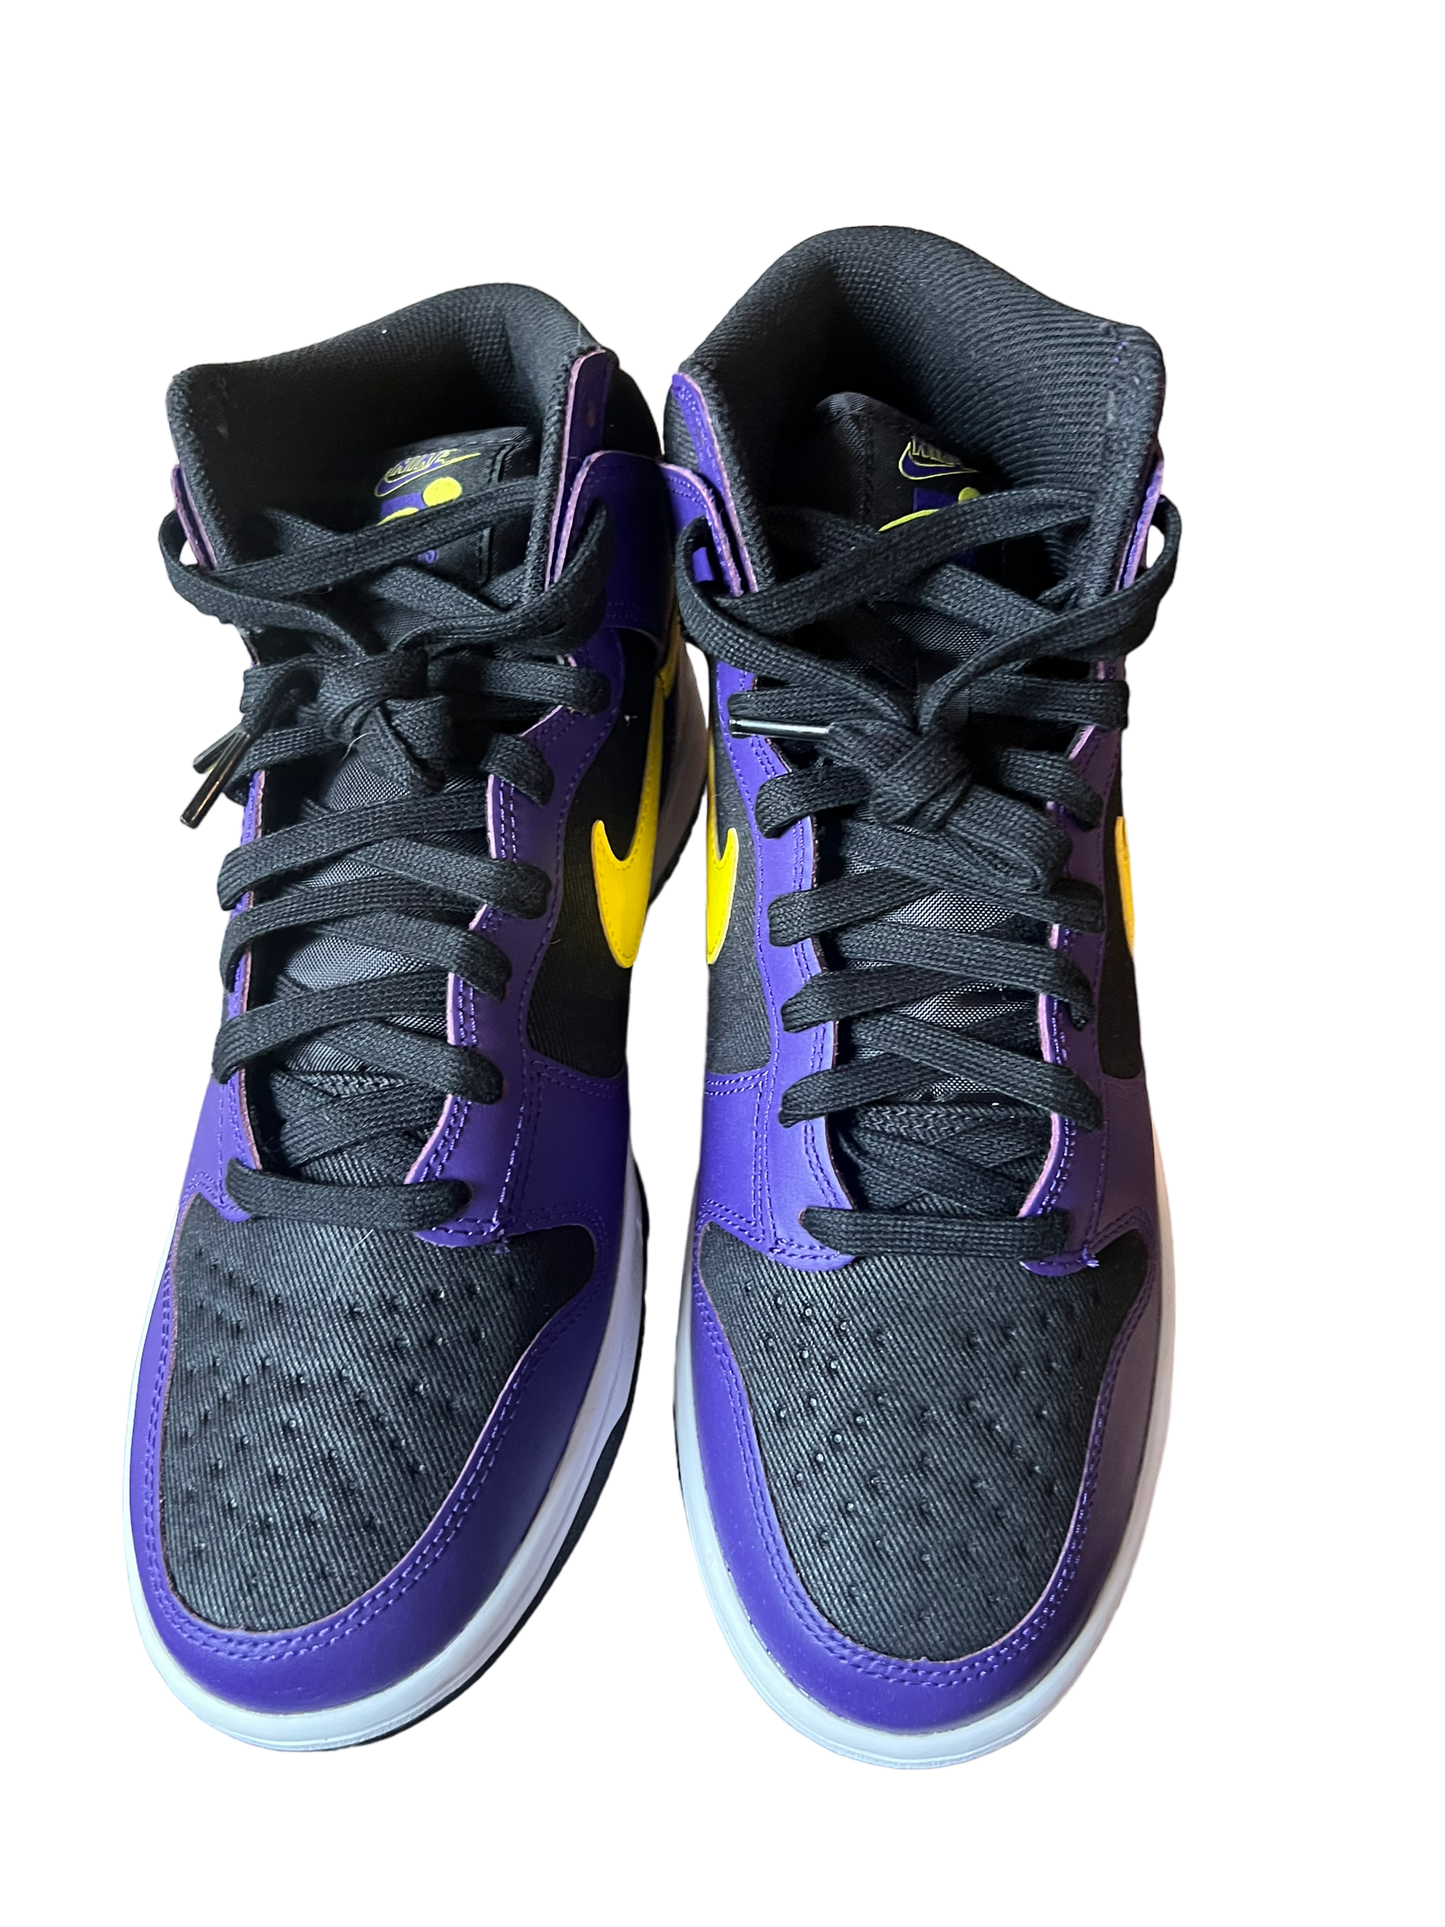 Nike Dunk High EMB “Lakers”